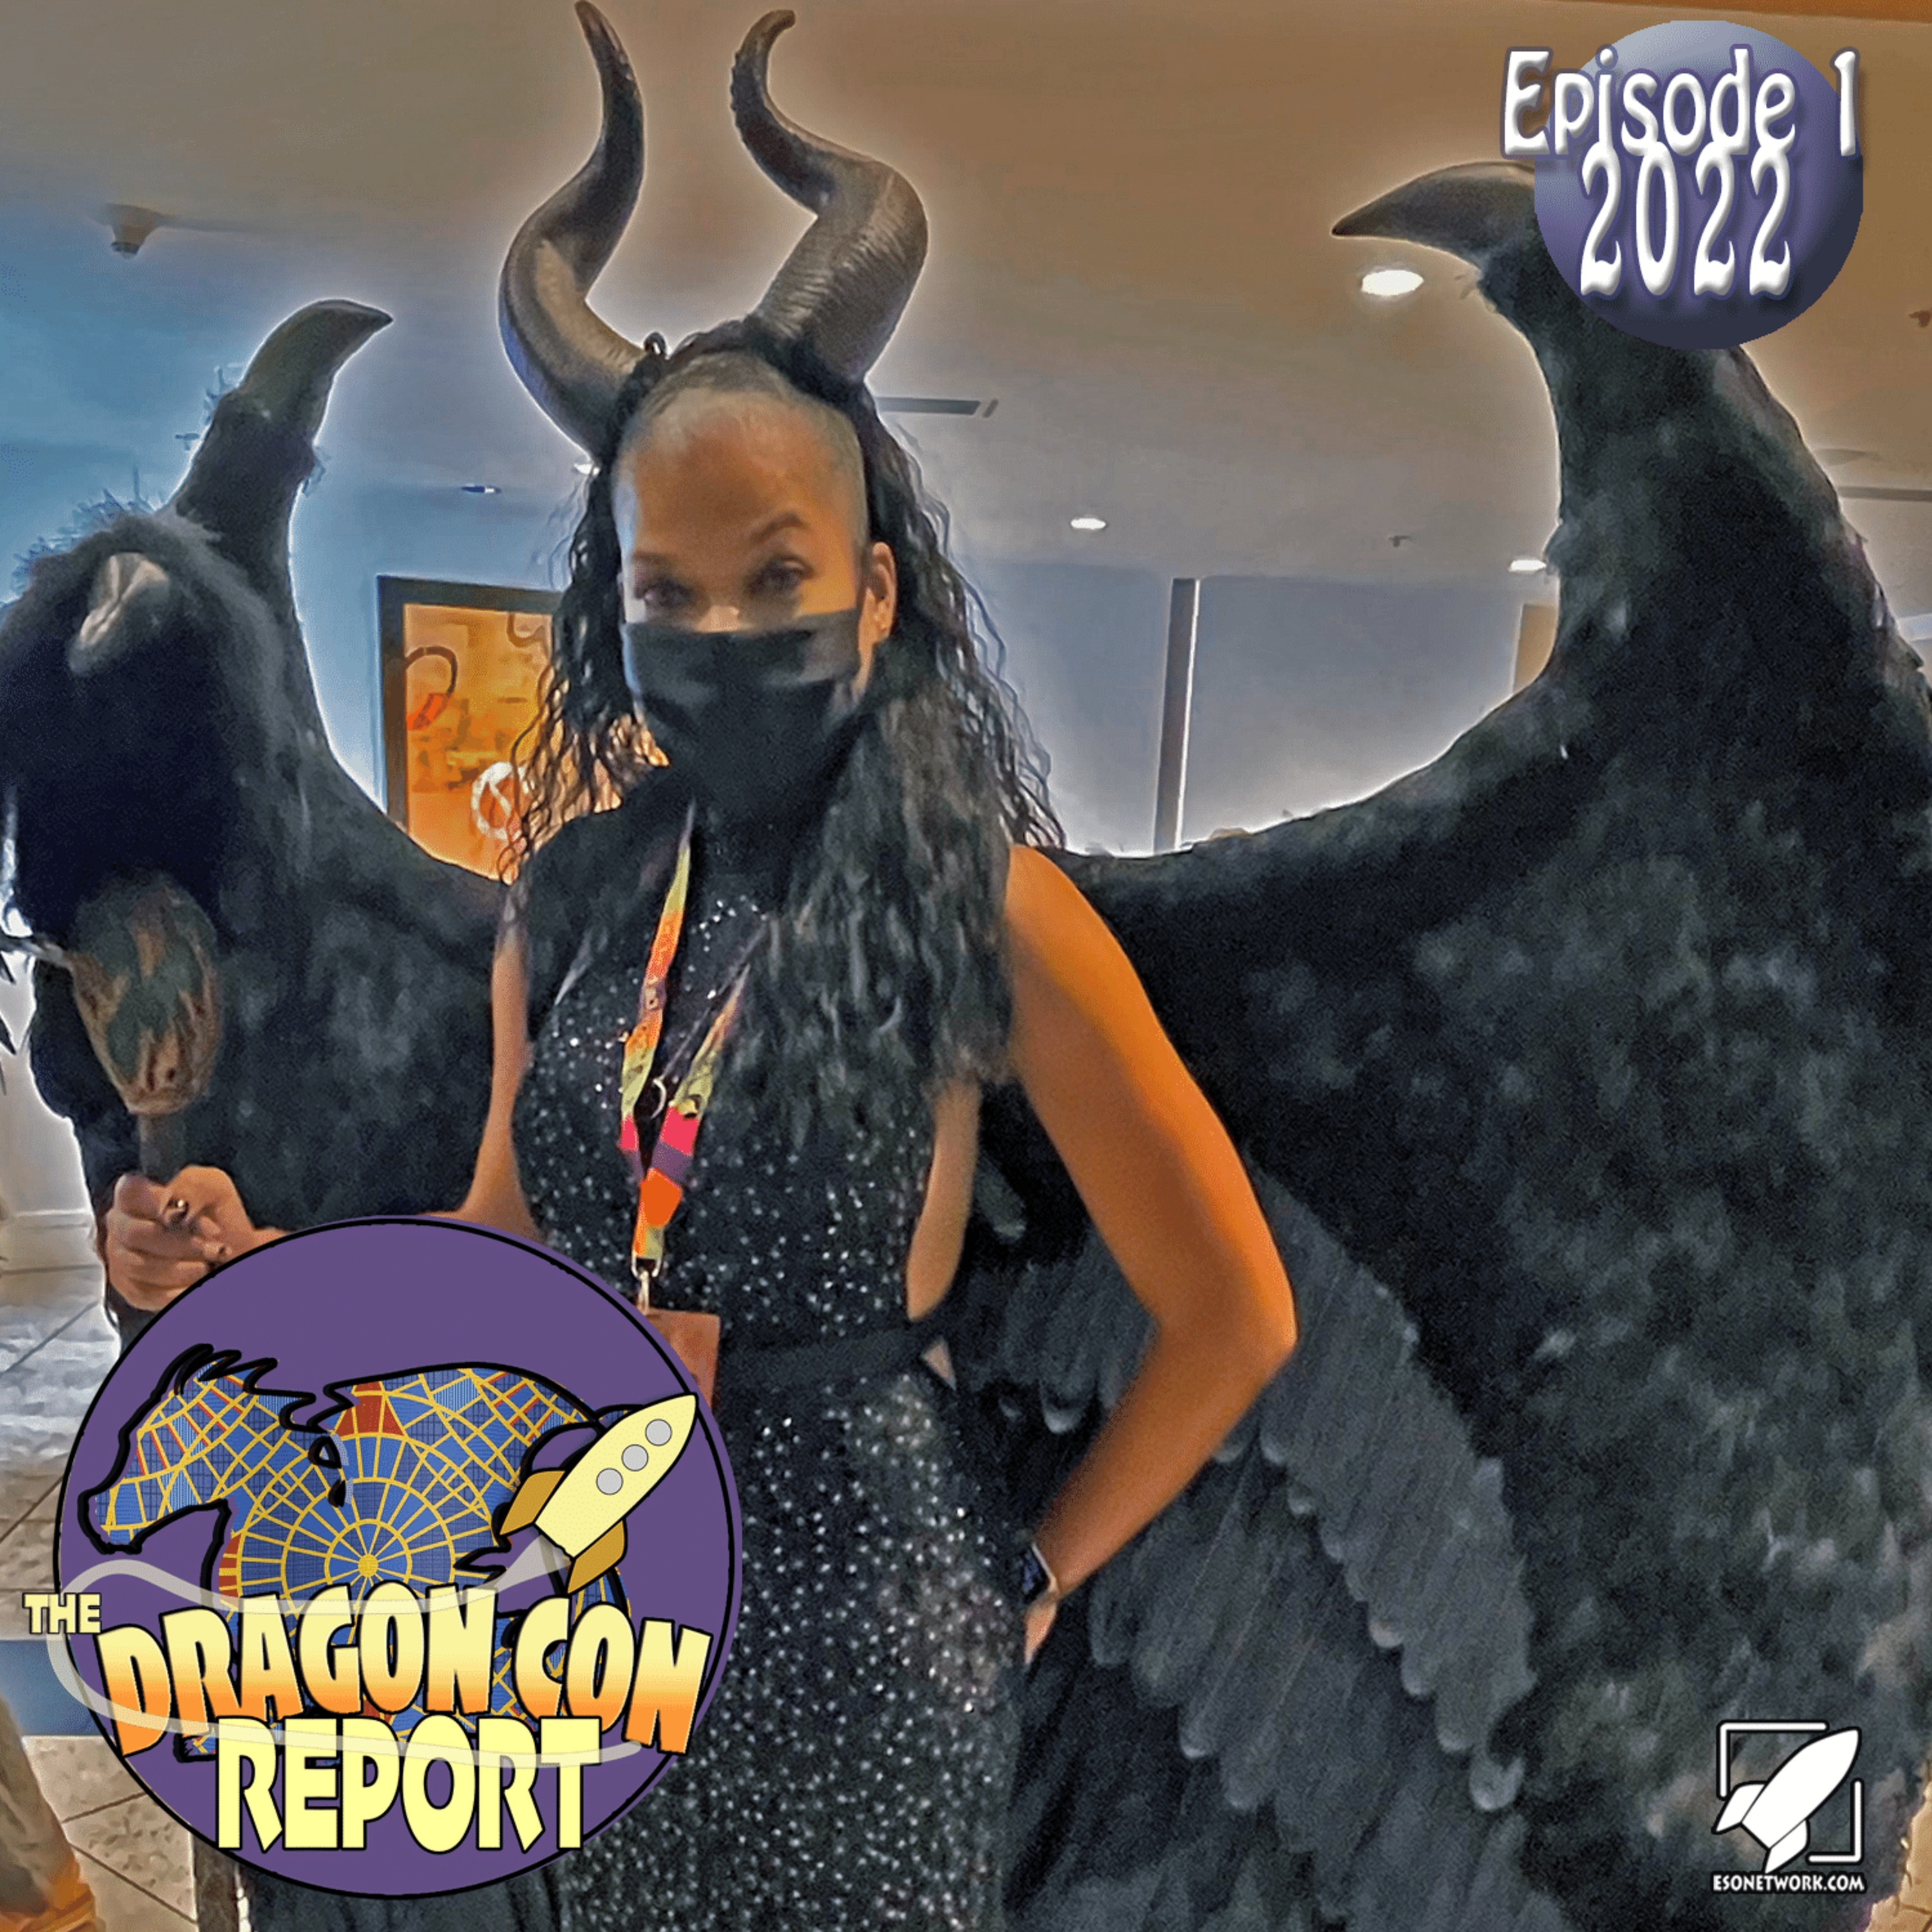 Episode 2201: The 2022 Dragon Con Report Episode 1